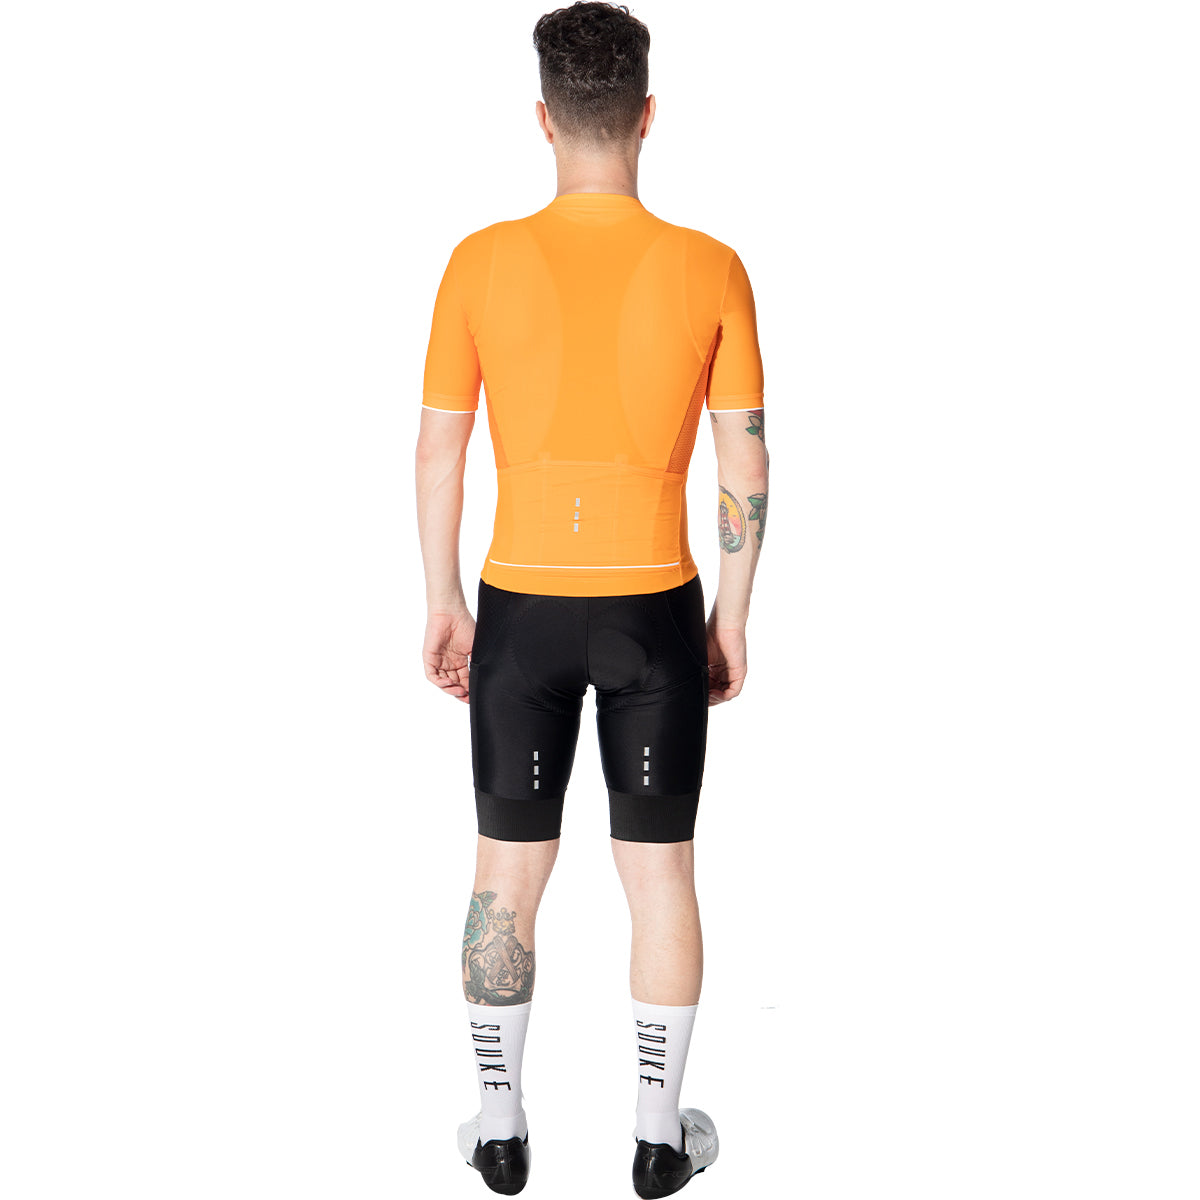 Pro Cut Cycling Jersey Unisex CS1105 - Orange (6581643575409)